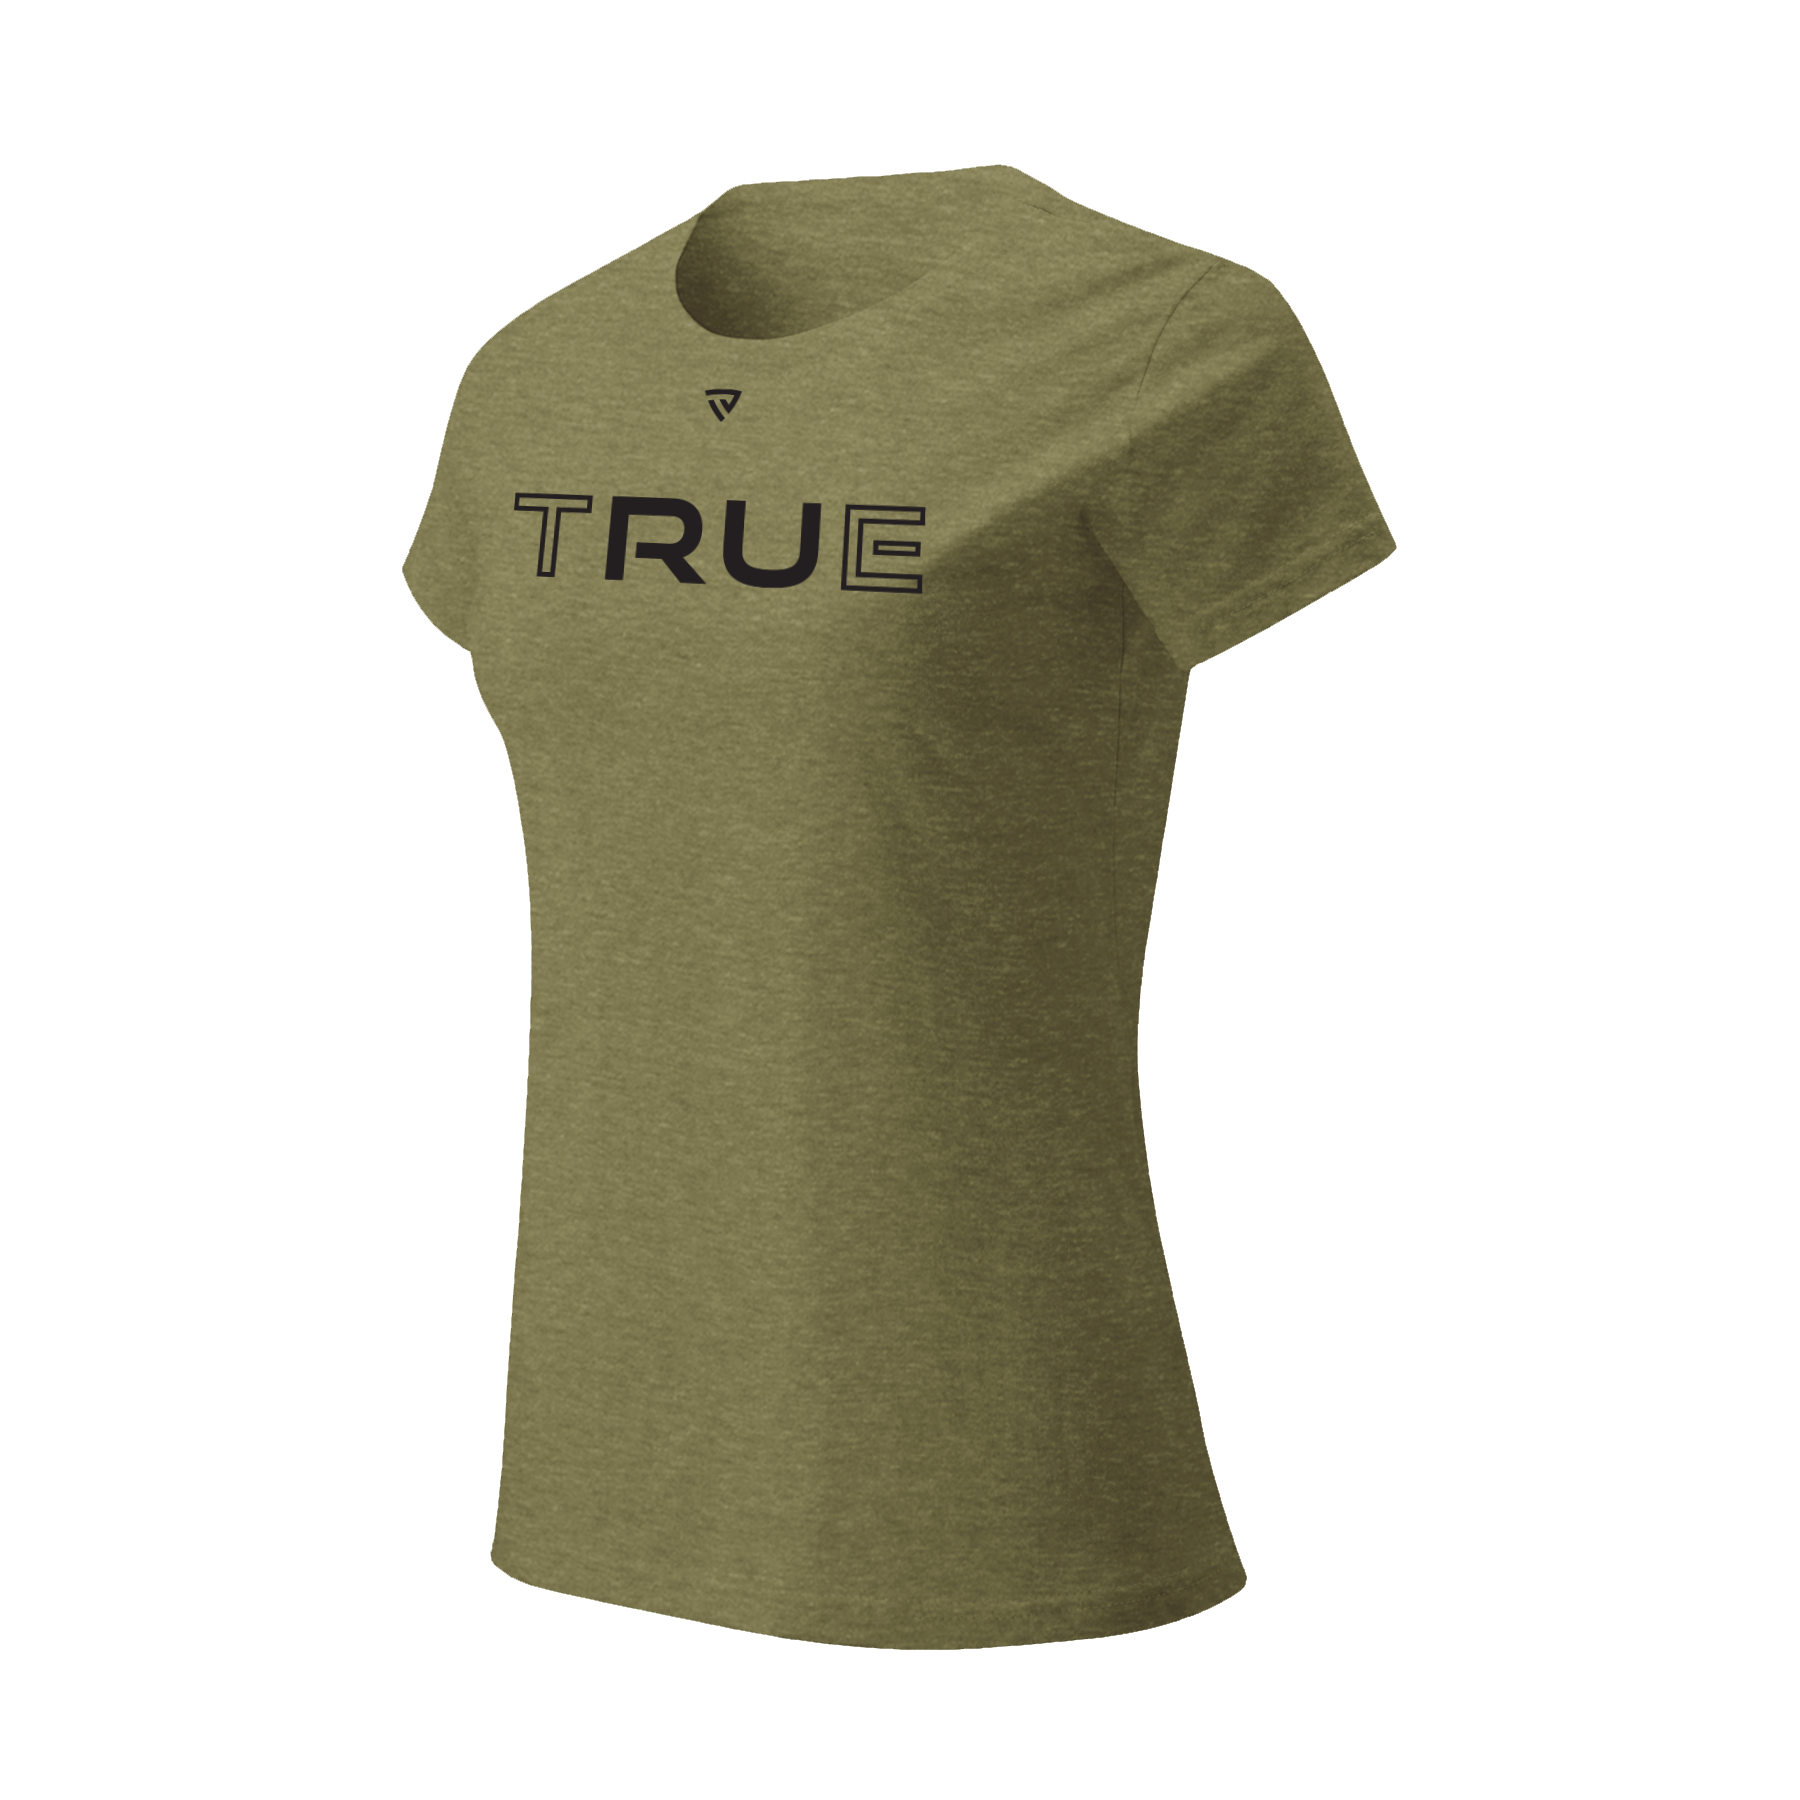 Women's RU TRUE Military Green Tee